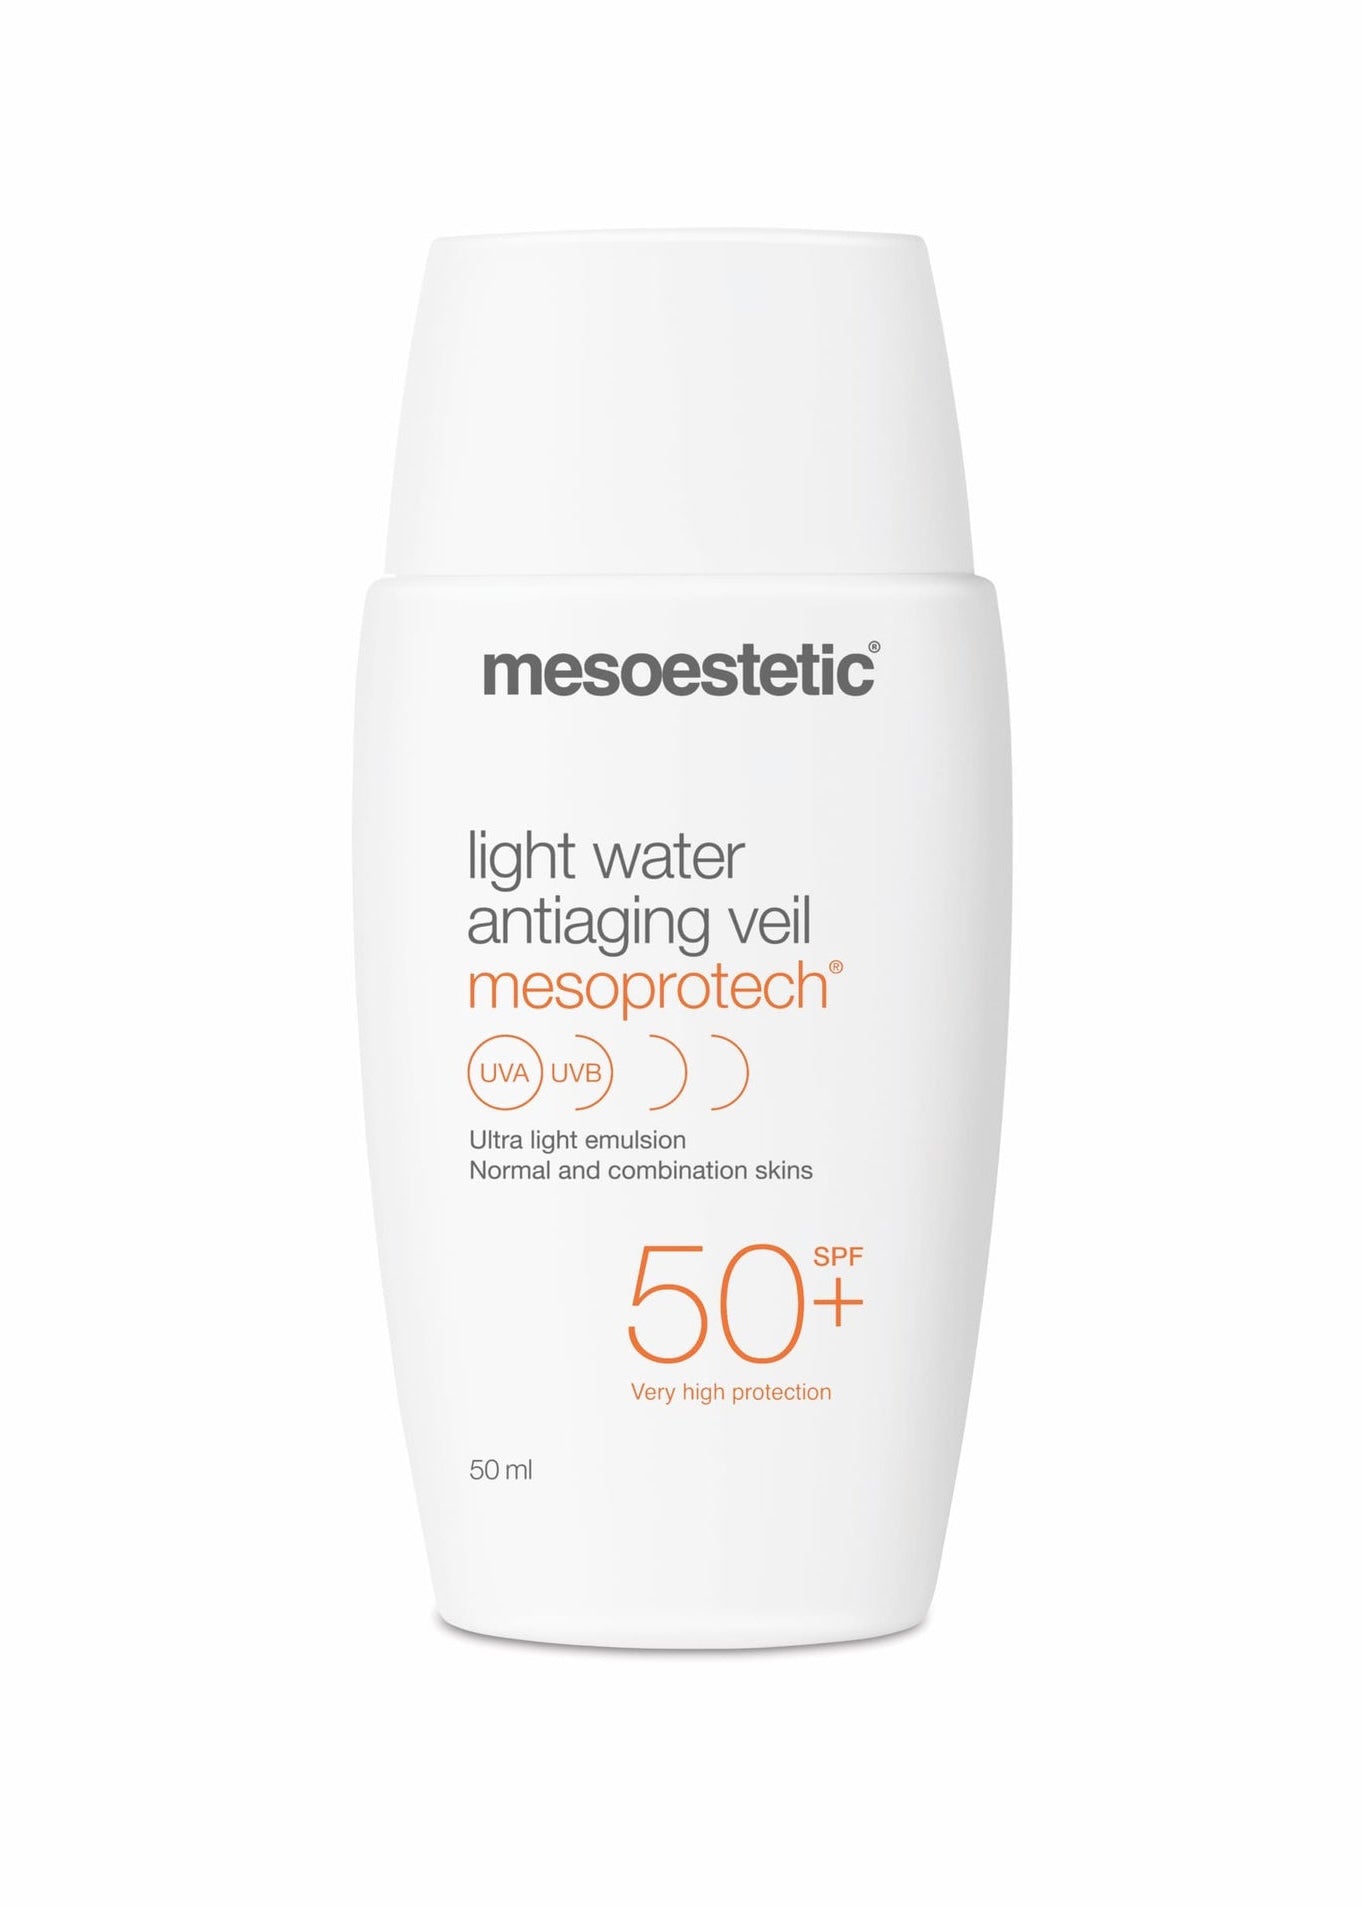 mesoestetic mesoprotech light water anti-aging veil 50ml